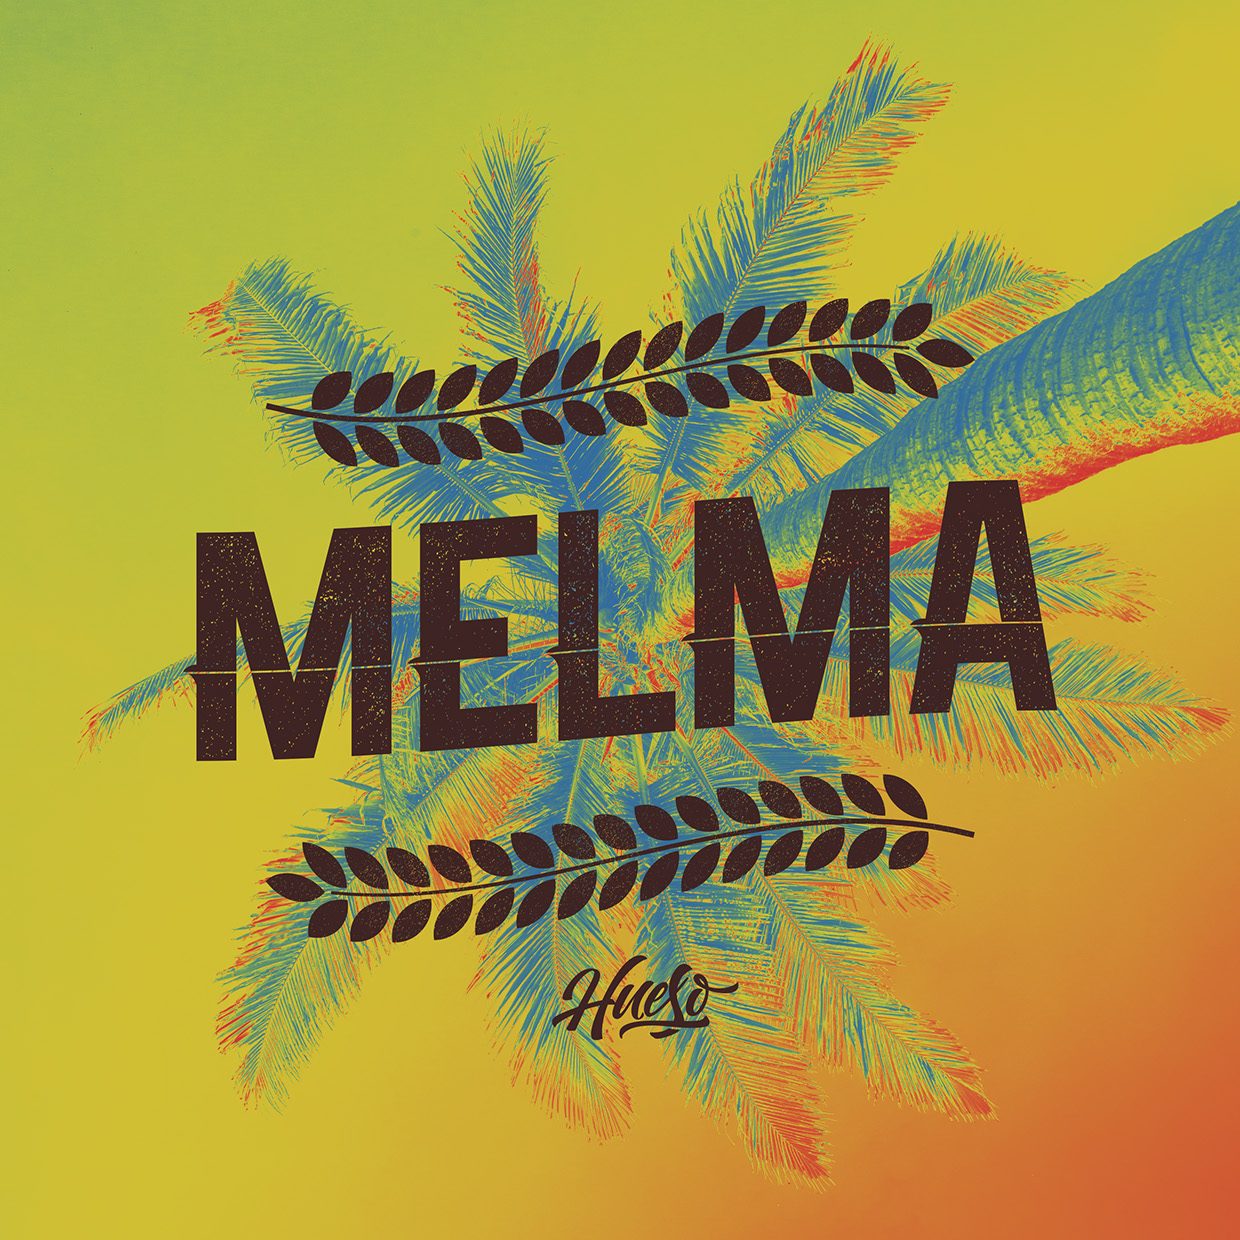 Melma Black font